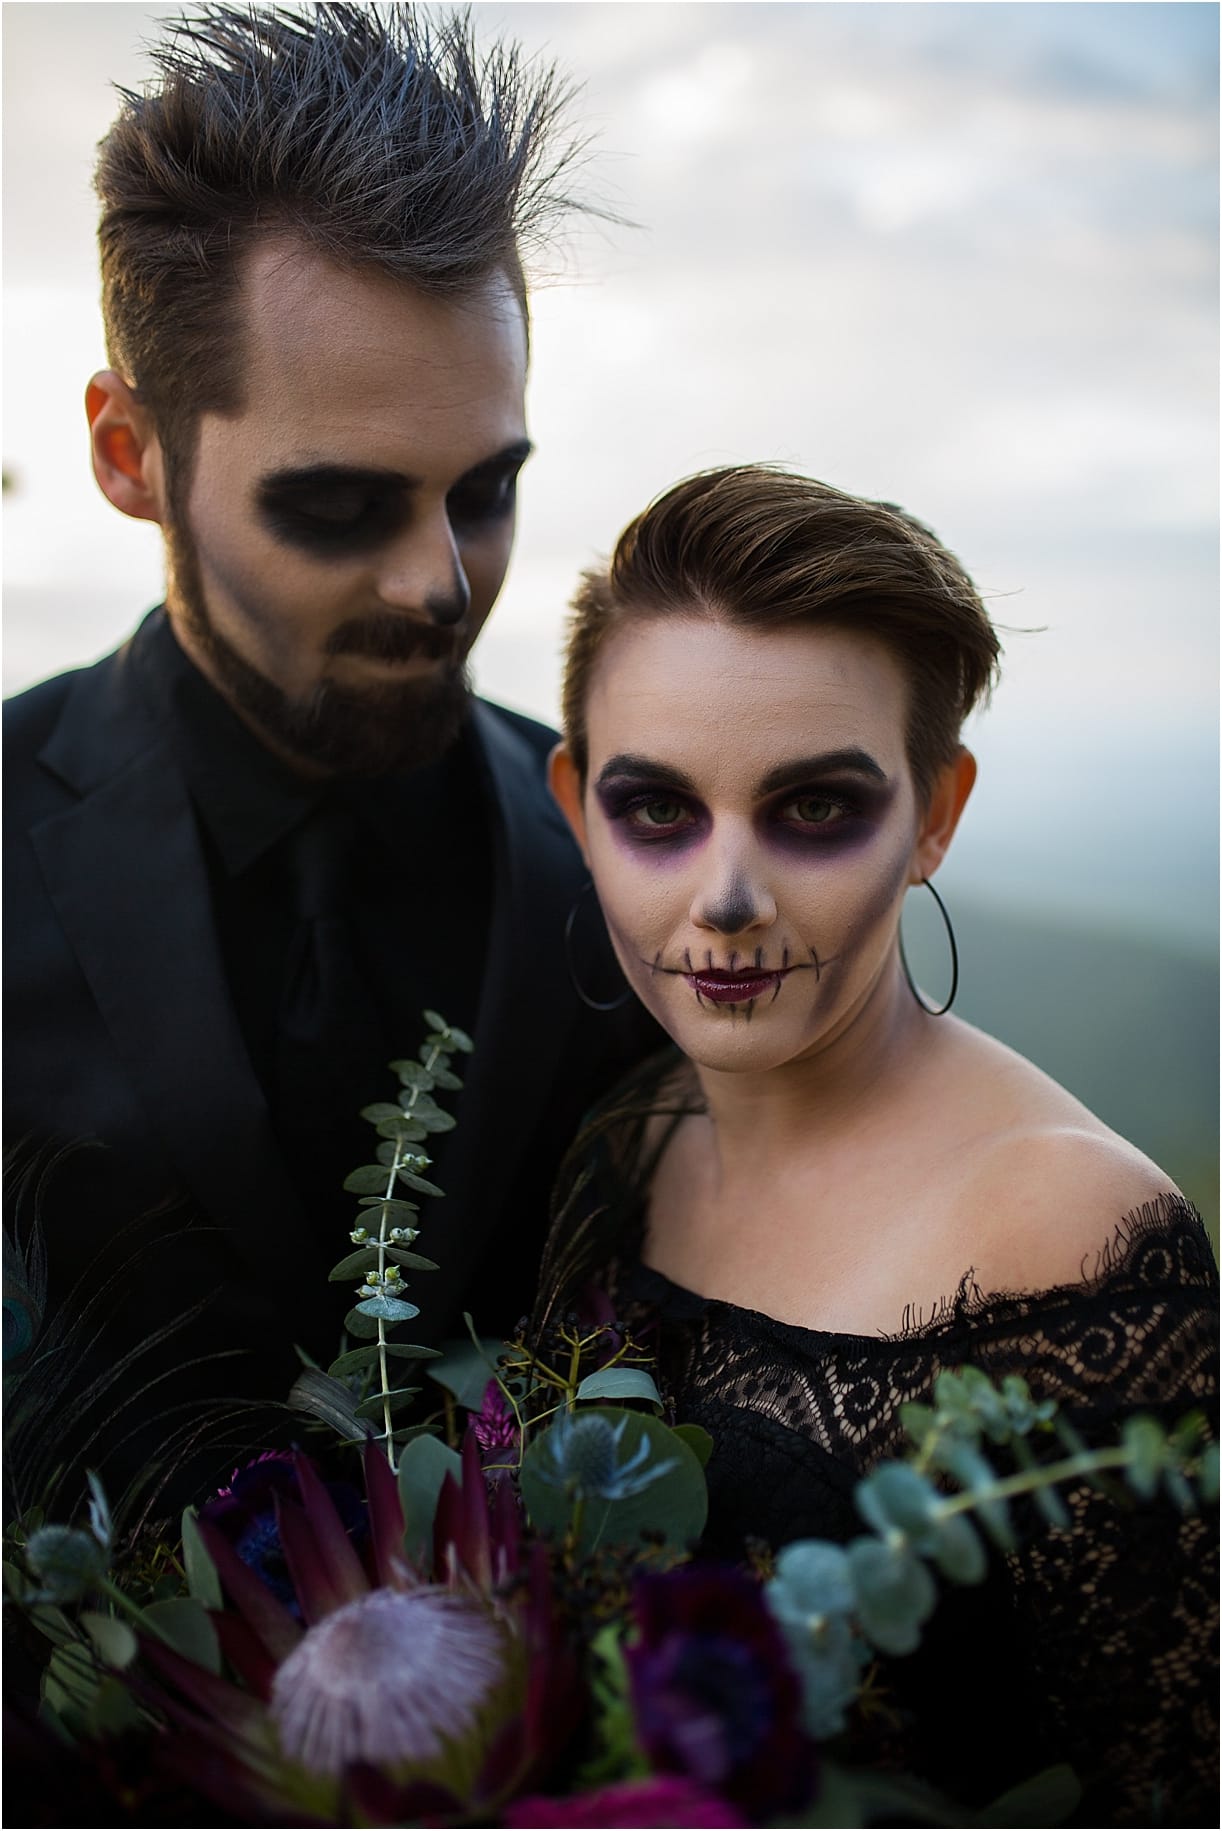 Creepy Halloween Makeup Ideas for Women | Face Makeup for Halloween | Hill City Bride Virginia Weddings Blog